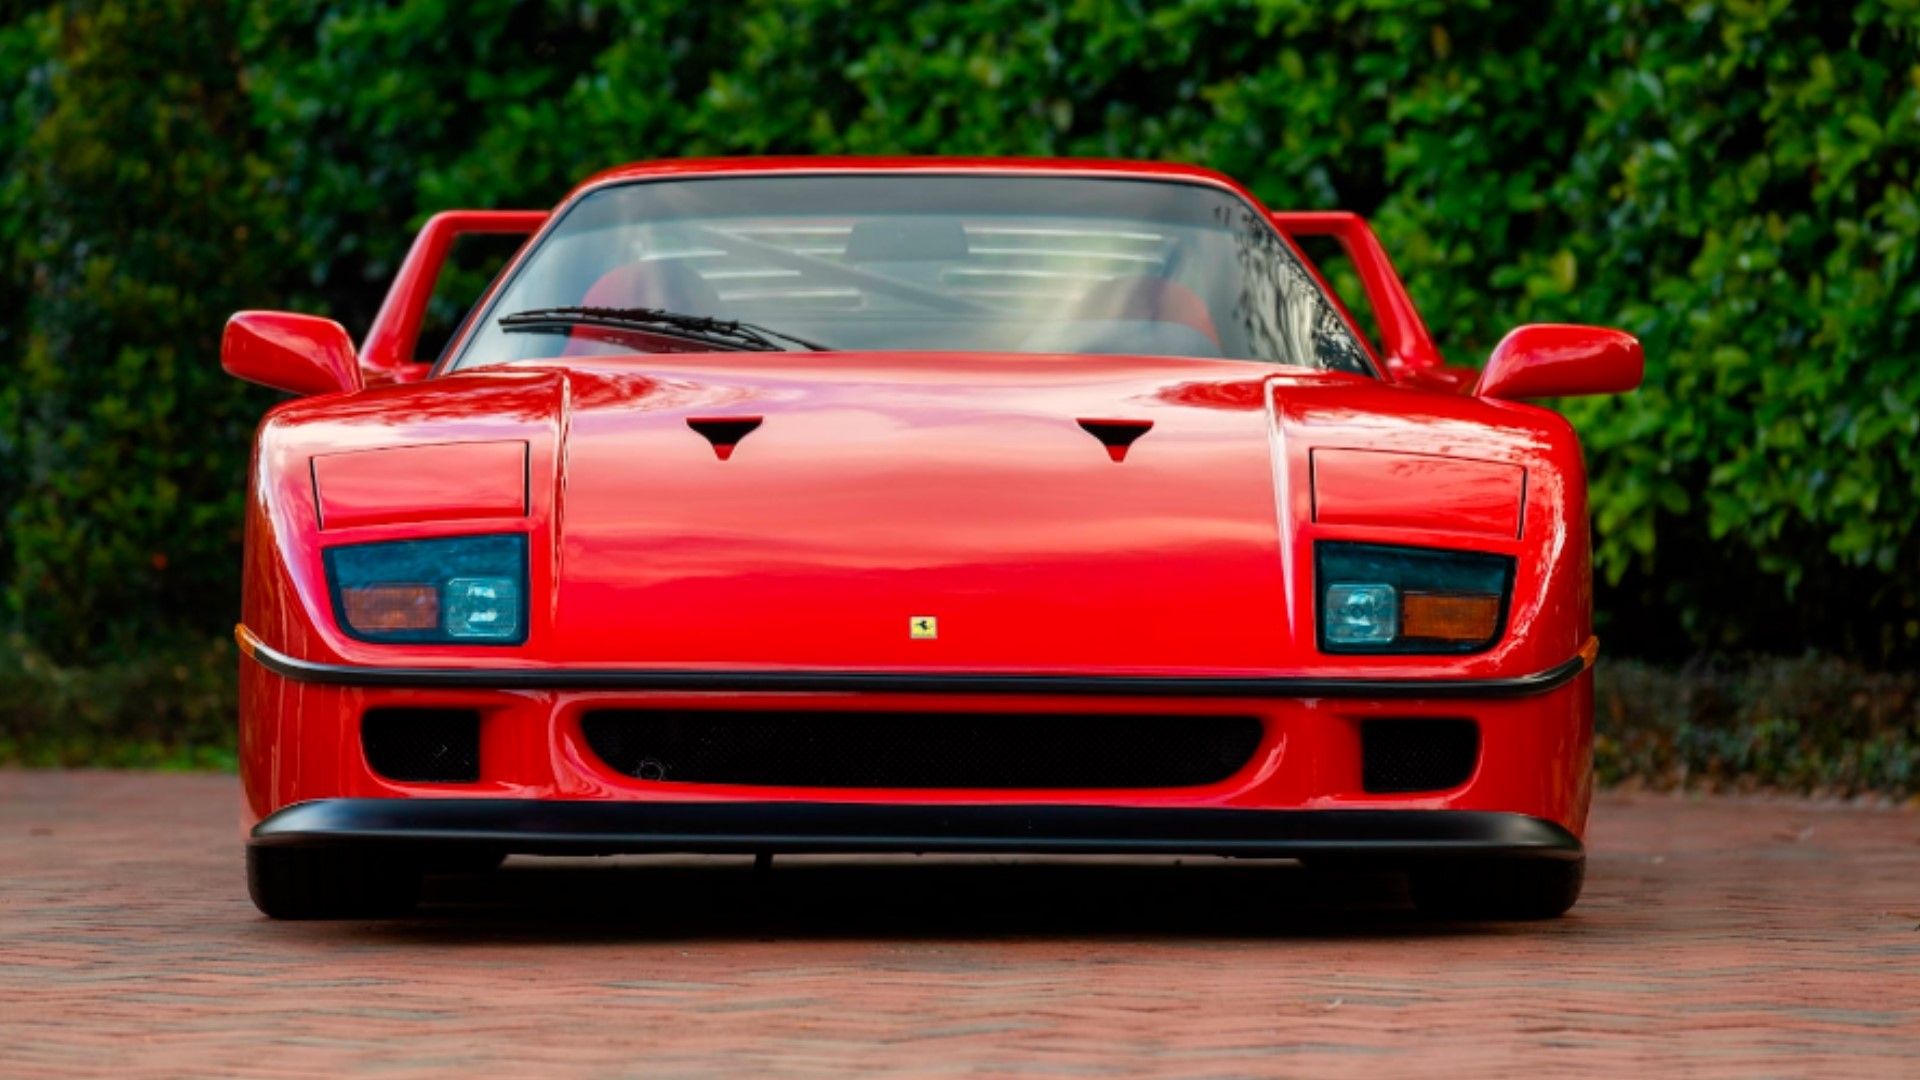 Low Mileage Ferrari F40 Valued at $3.5 Million, Engine Underwent